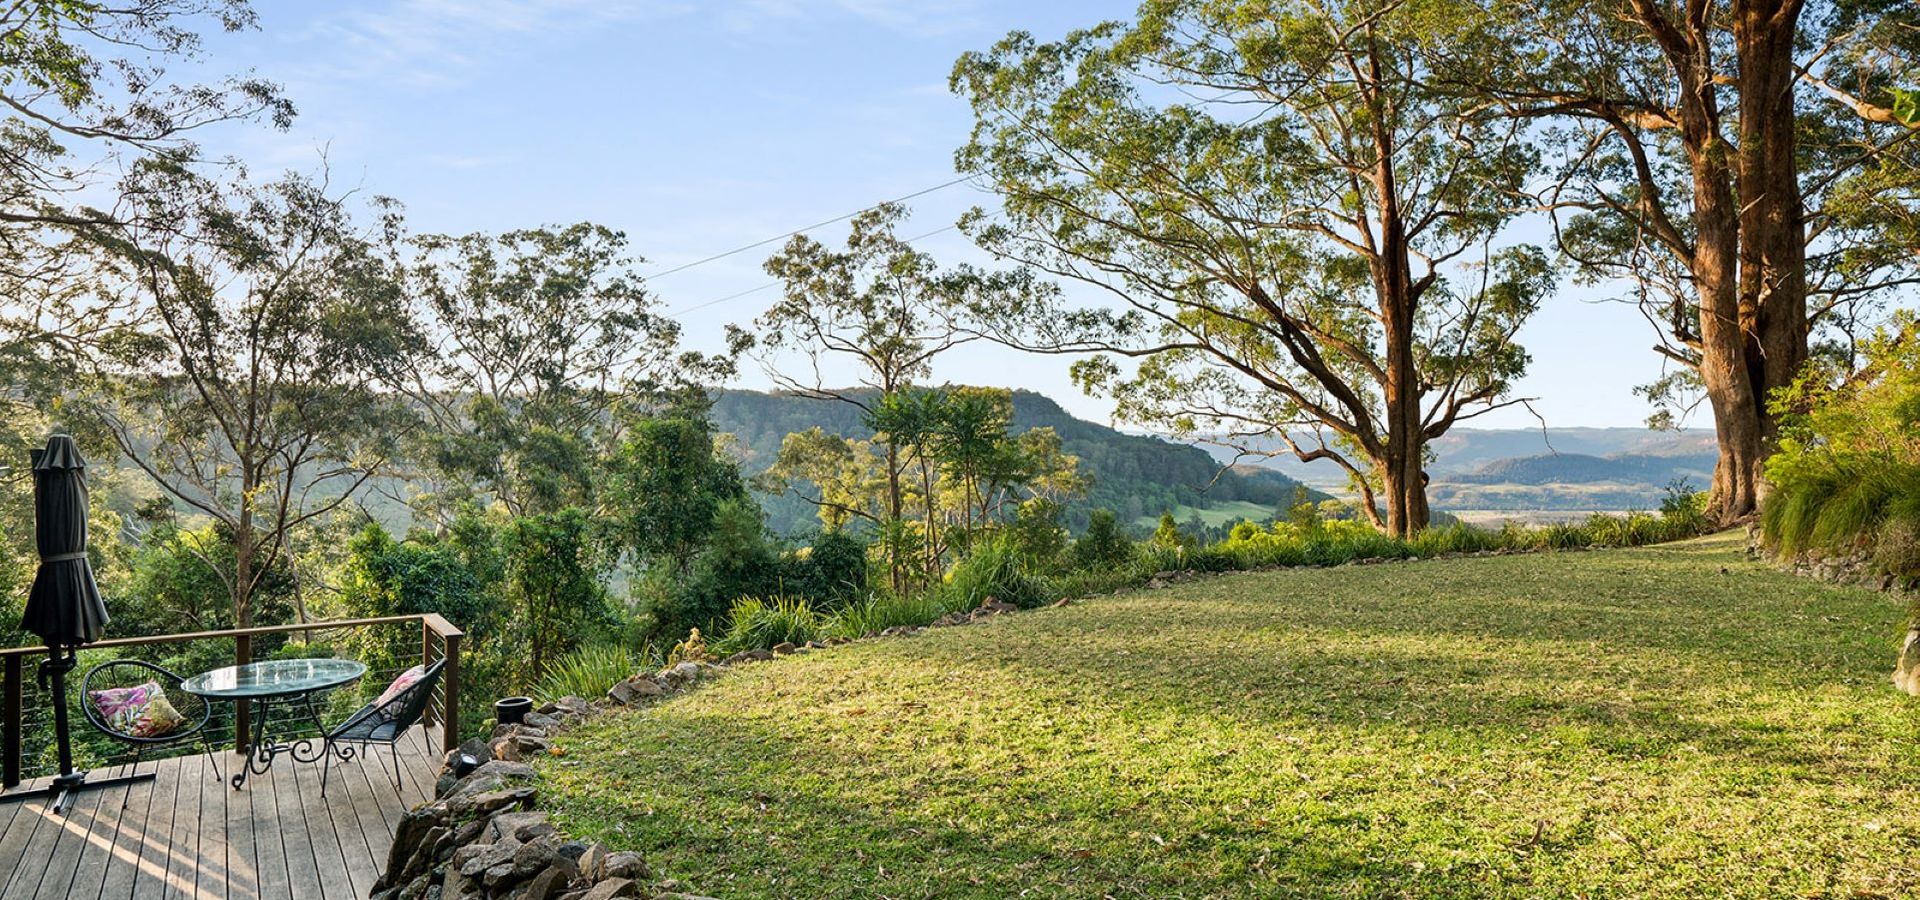 Ribbonwood, Kangaroo Valley